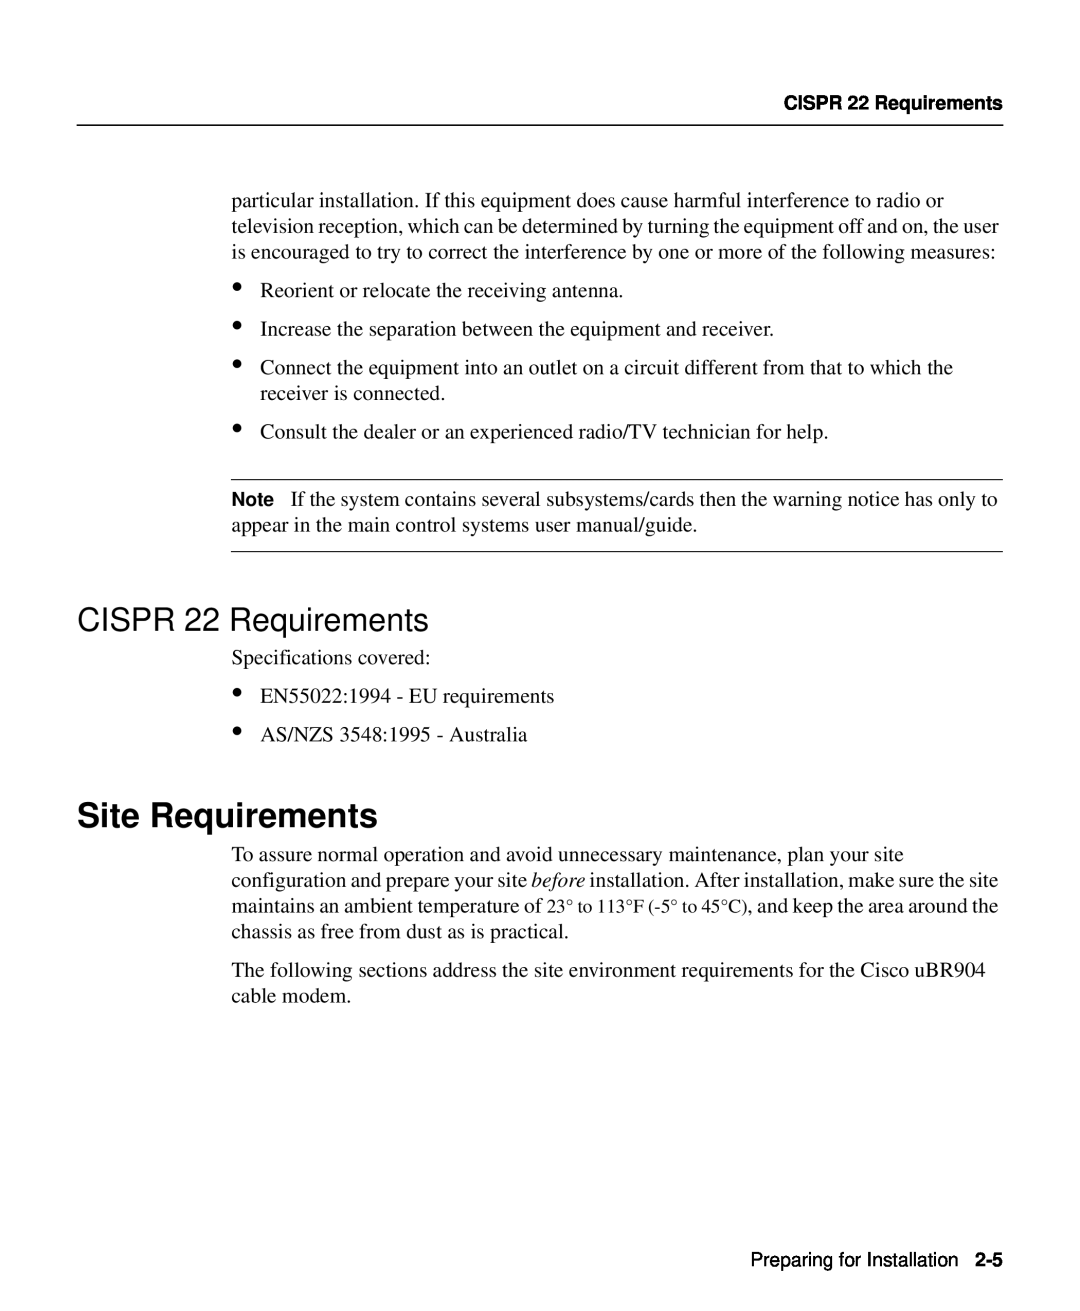 Cisco Systems UBR904 manual Site Requirements, CISPR 22 Requirements 